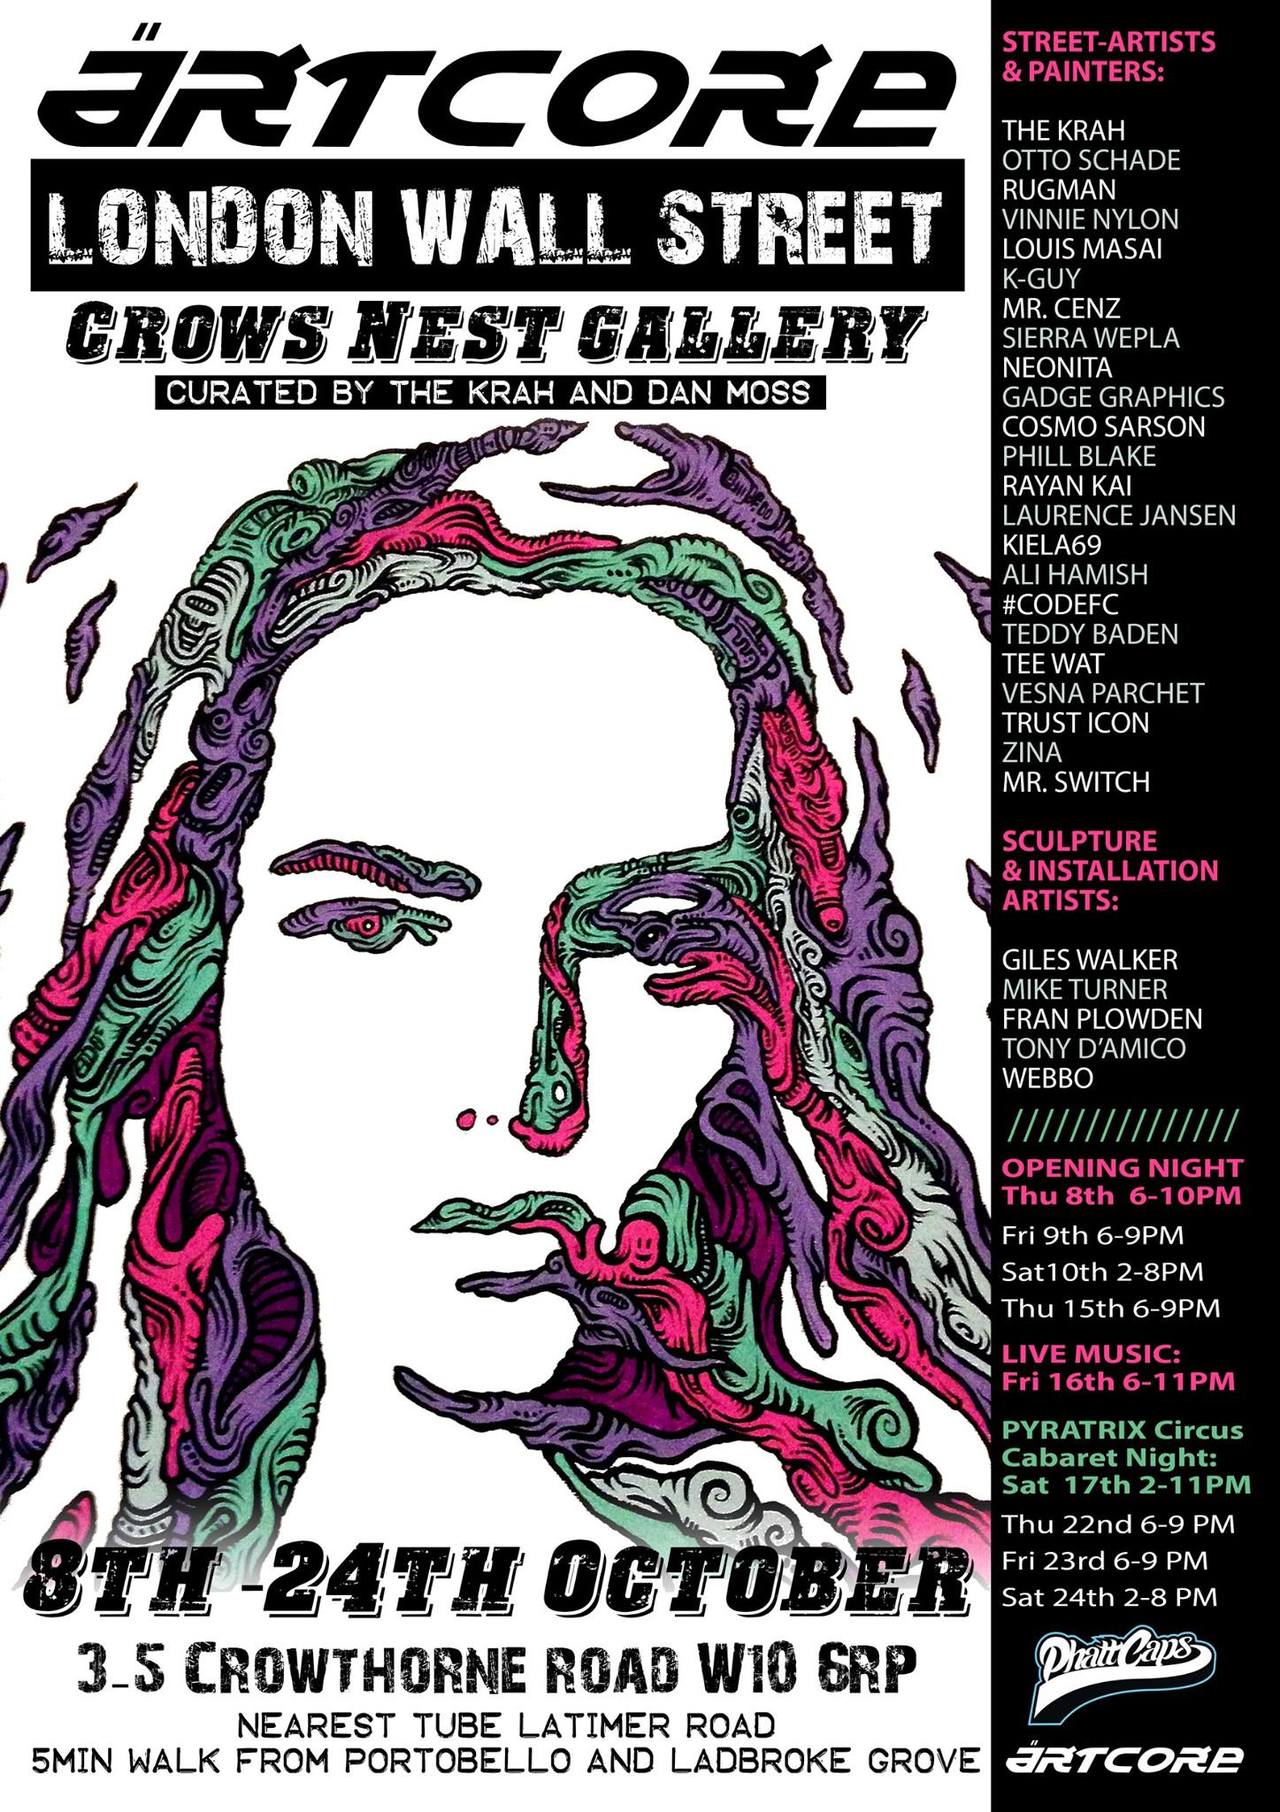 #Artcore show opening 8th Oct @ Crows Nest gallery W10 Curated by @THE_KRAH_ART + Dan Moss #streetart #art #graffiti http://t.co/BvcWB5RxpK